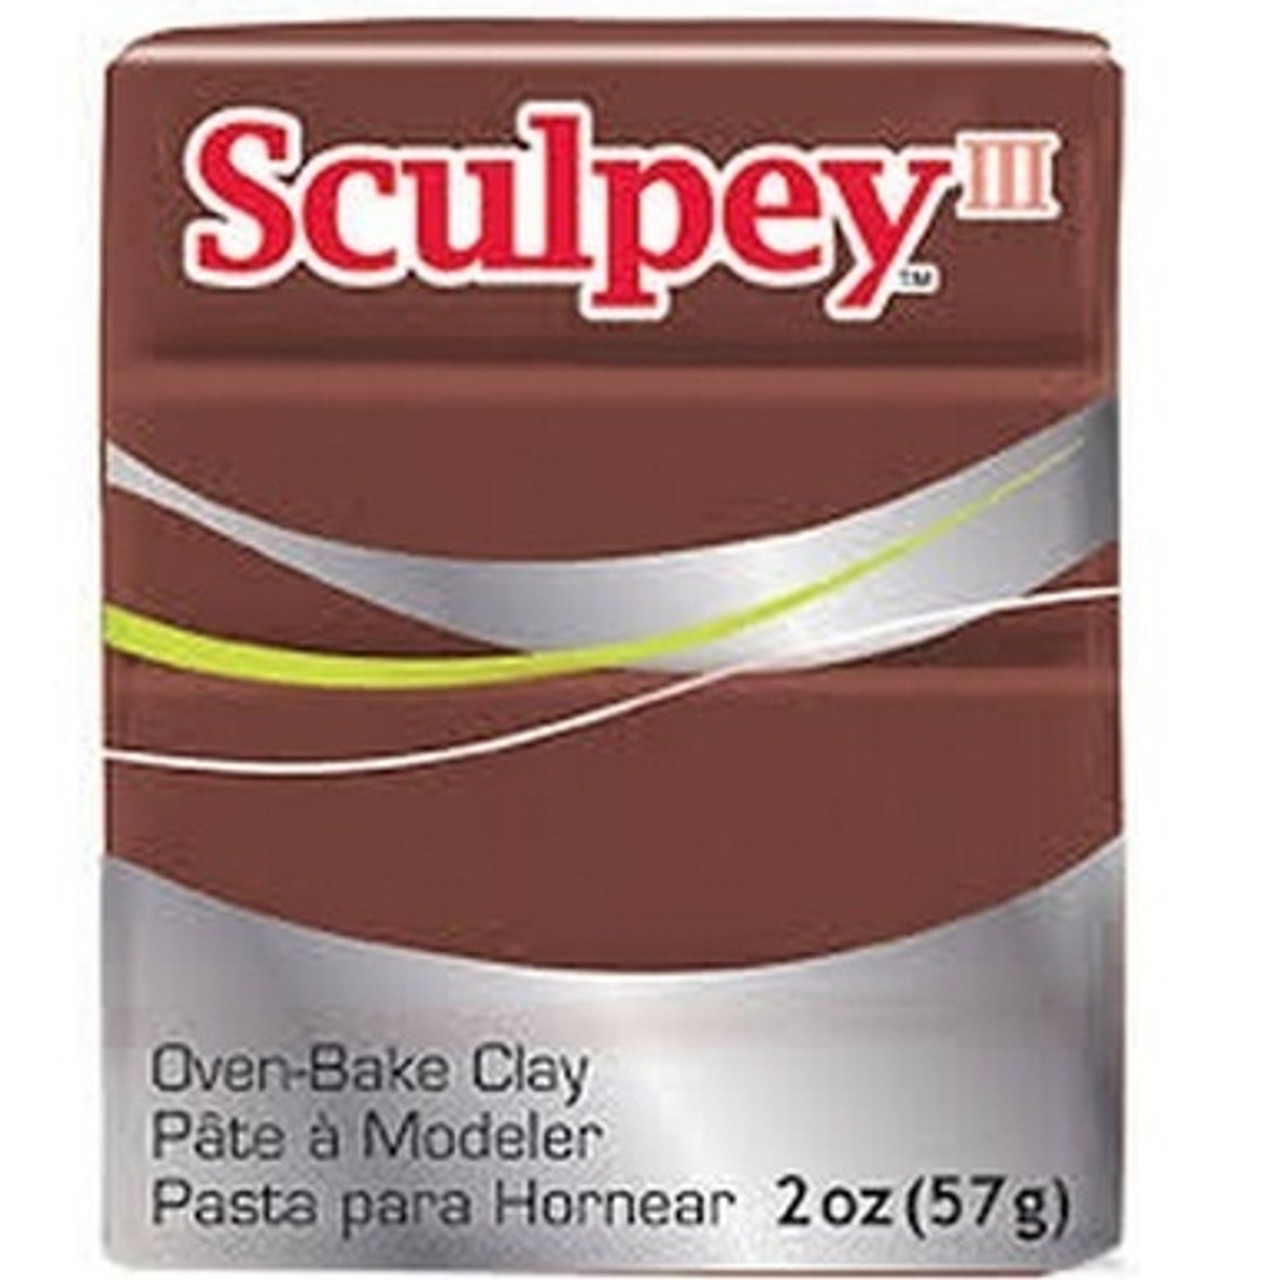 Sculpey III Chocolate 2oz (57g)